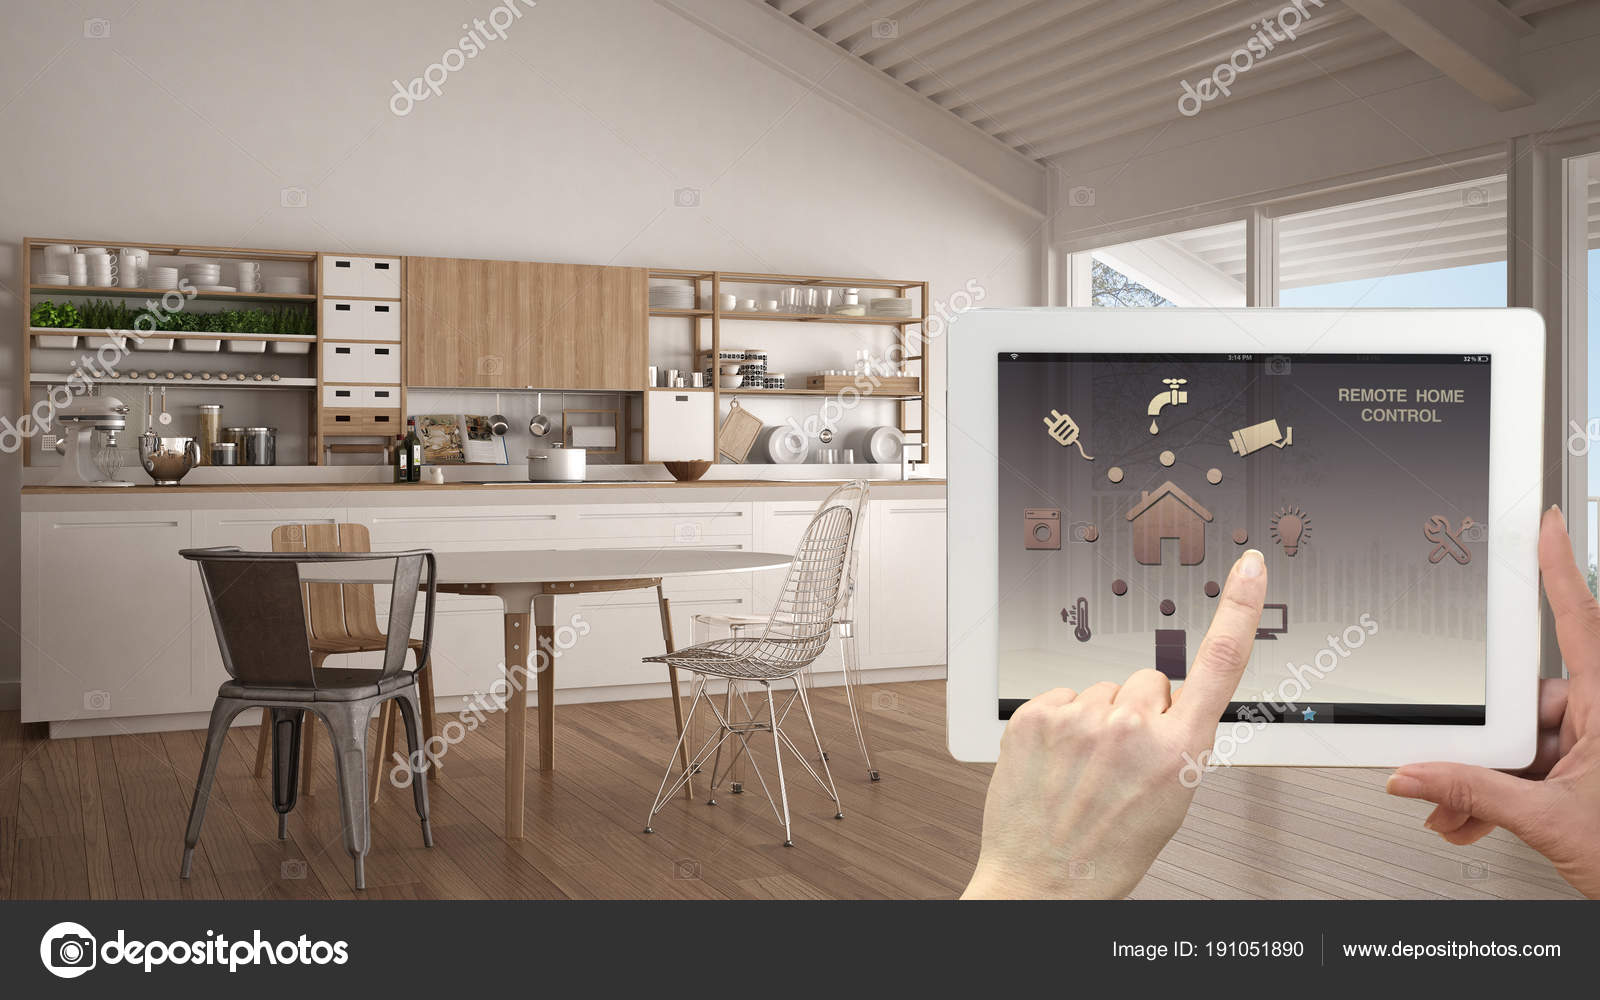 depositphotos_191051890-stock-photo-smart-remote-home-control-system.jpg